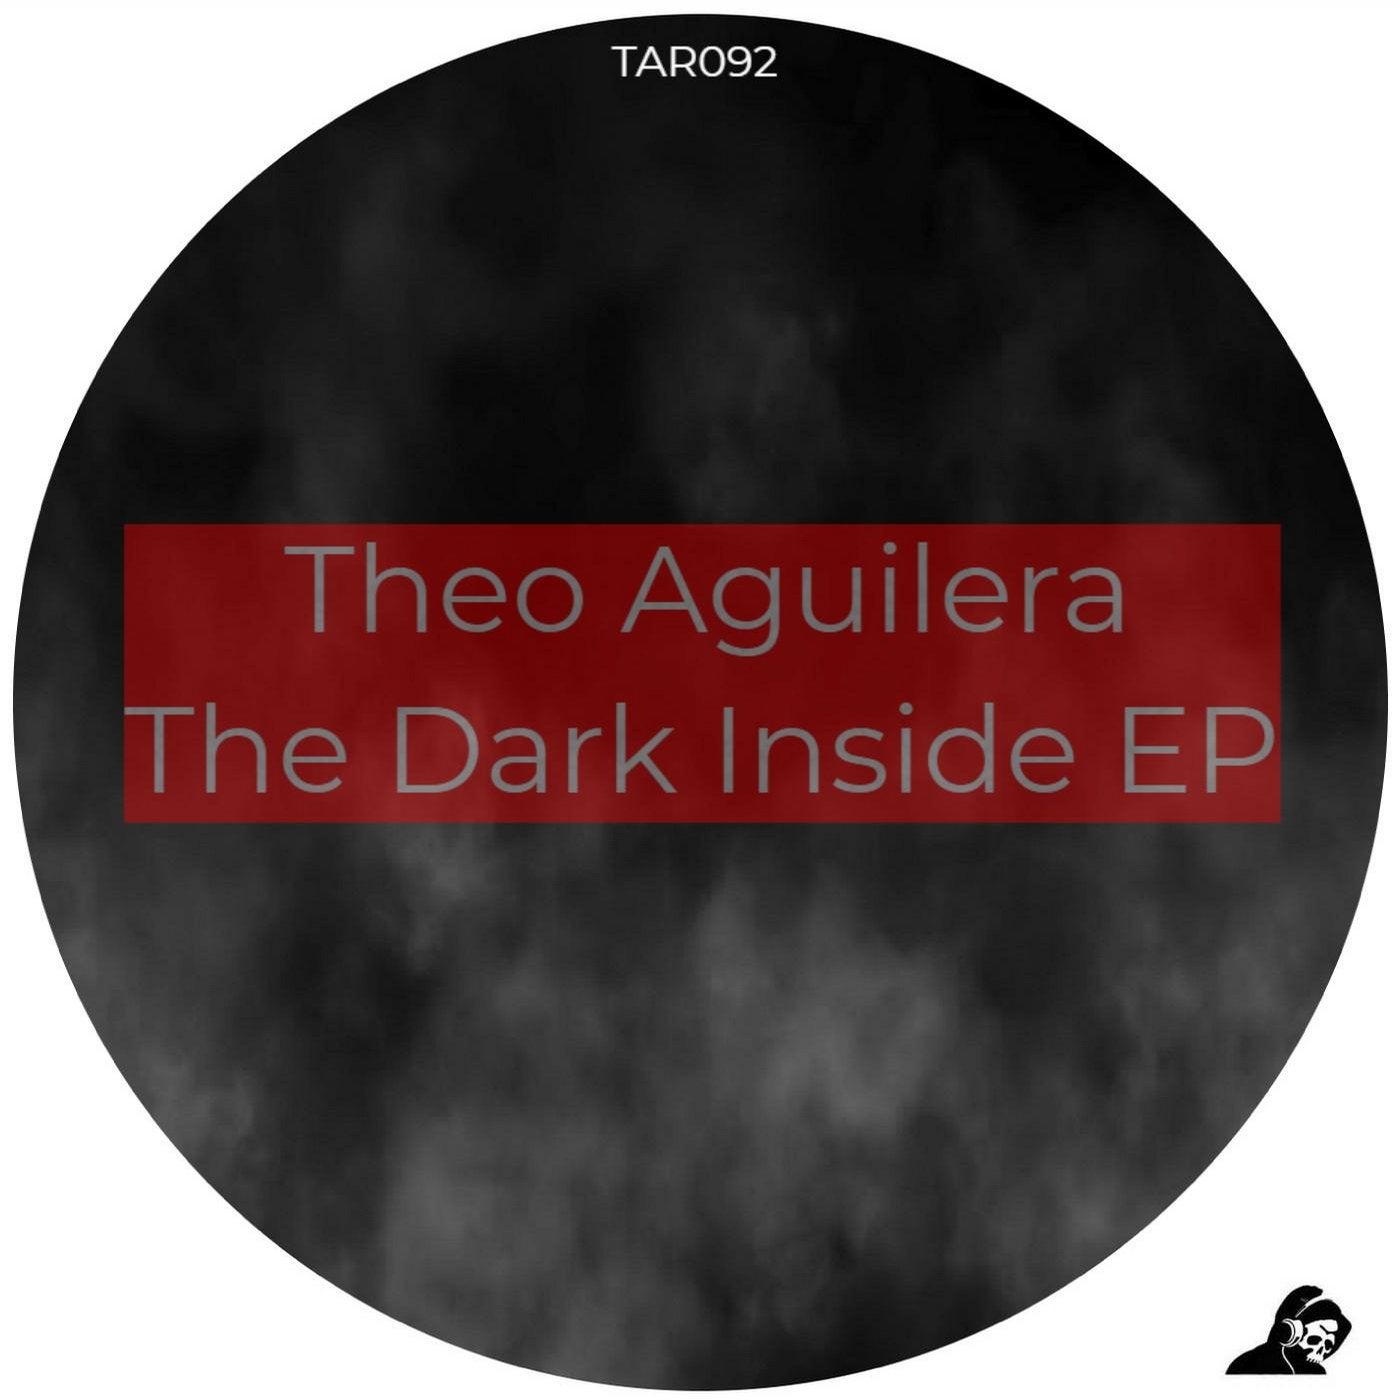 The Dark Inside EP